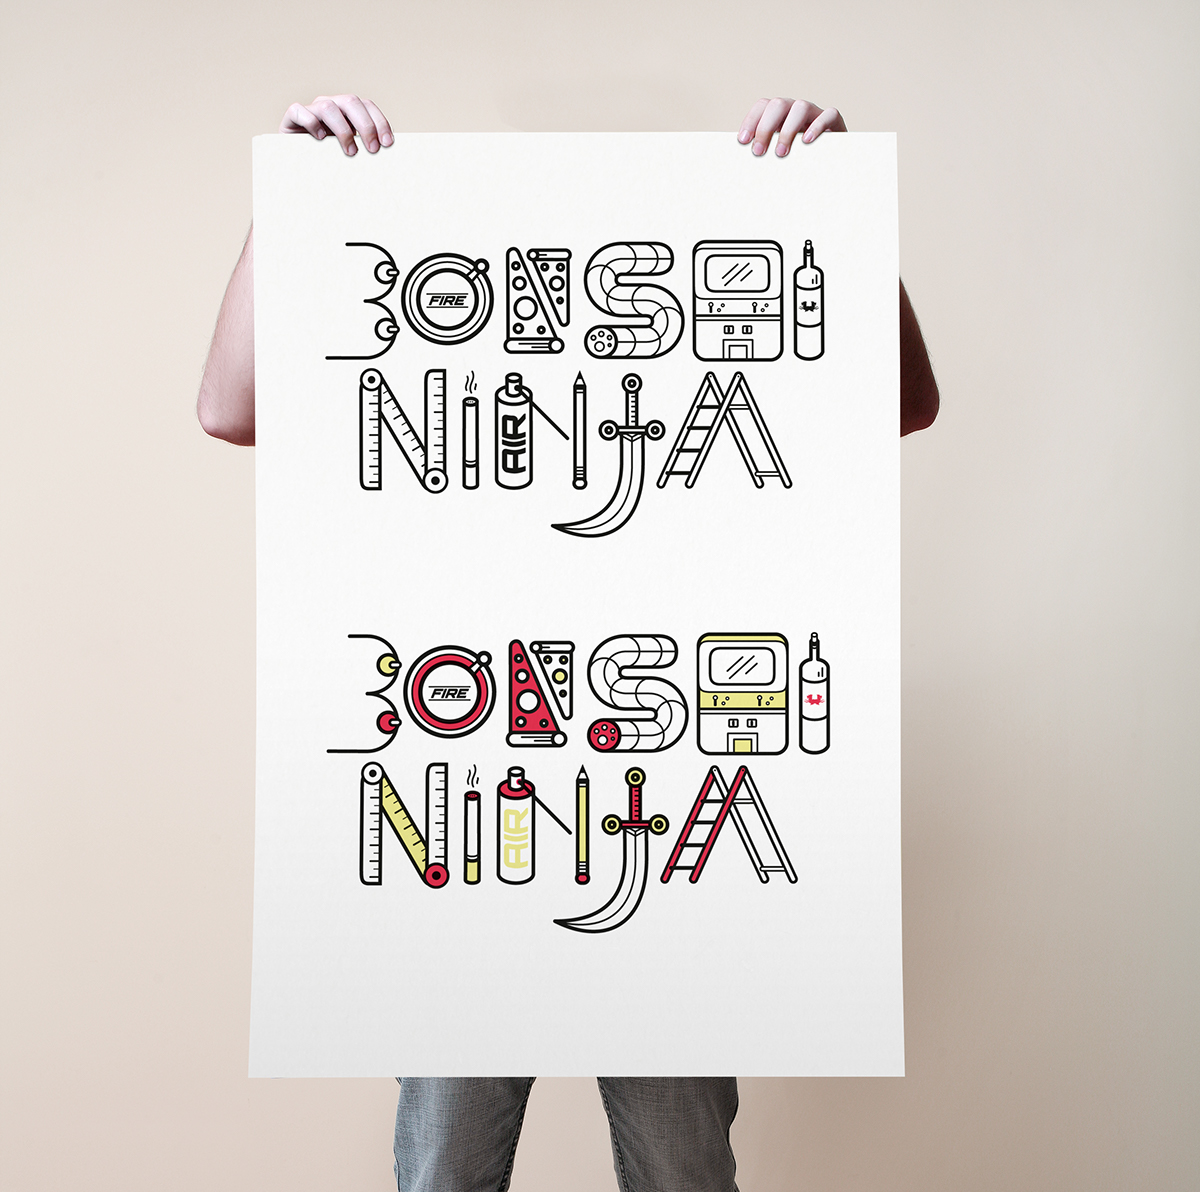 font fontdesign design illustrations bonsai flat Plant bonsaininja bax type typograph poster tees t-shirt